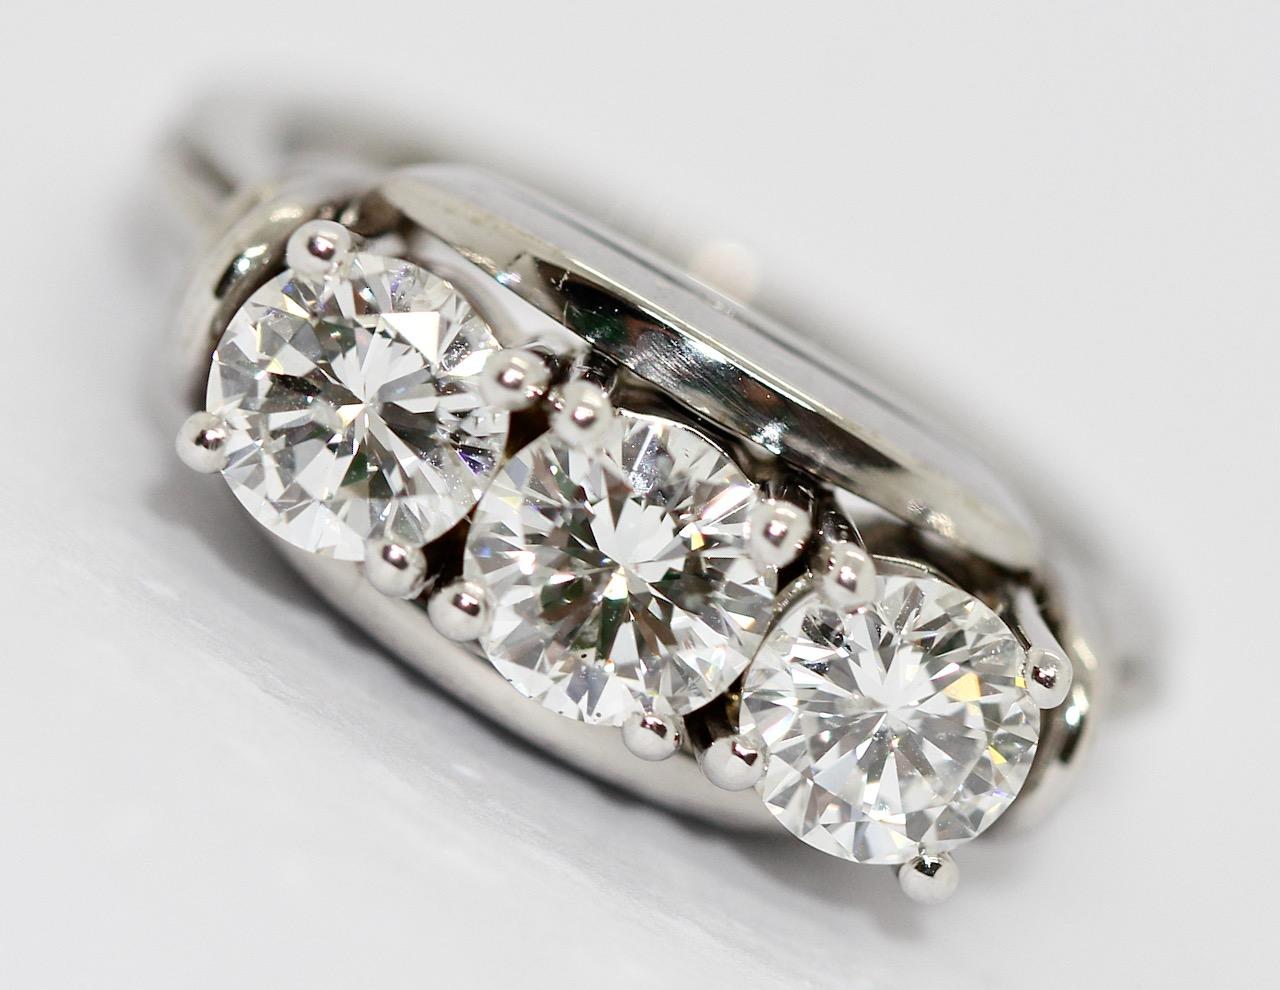 1.6 carat diamond ring